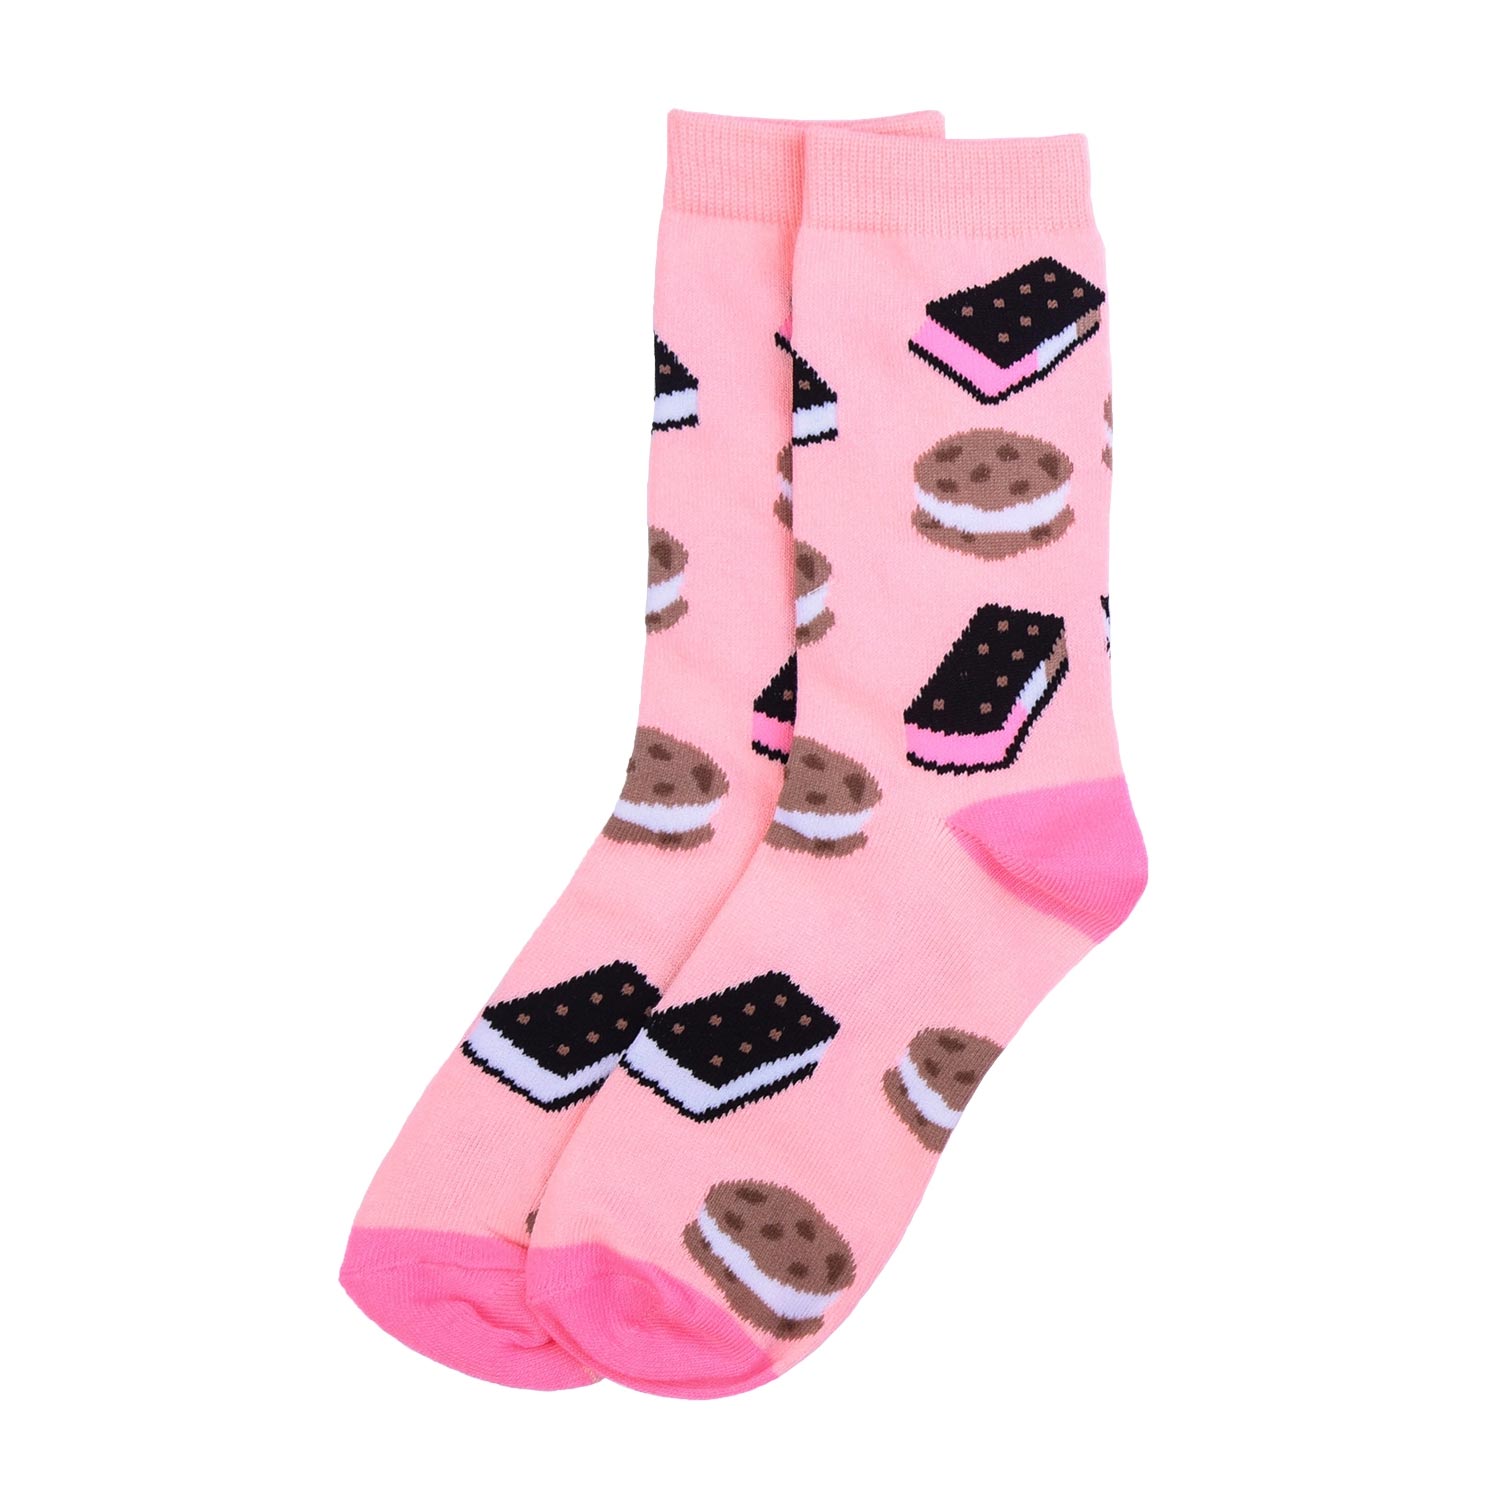 10 Pairs Women's Novelty Crew Socks